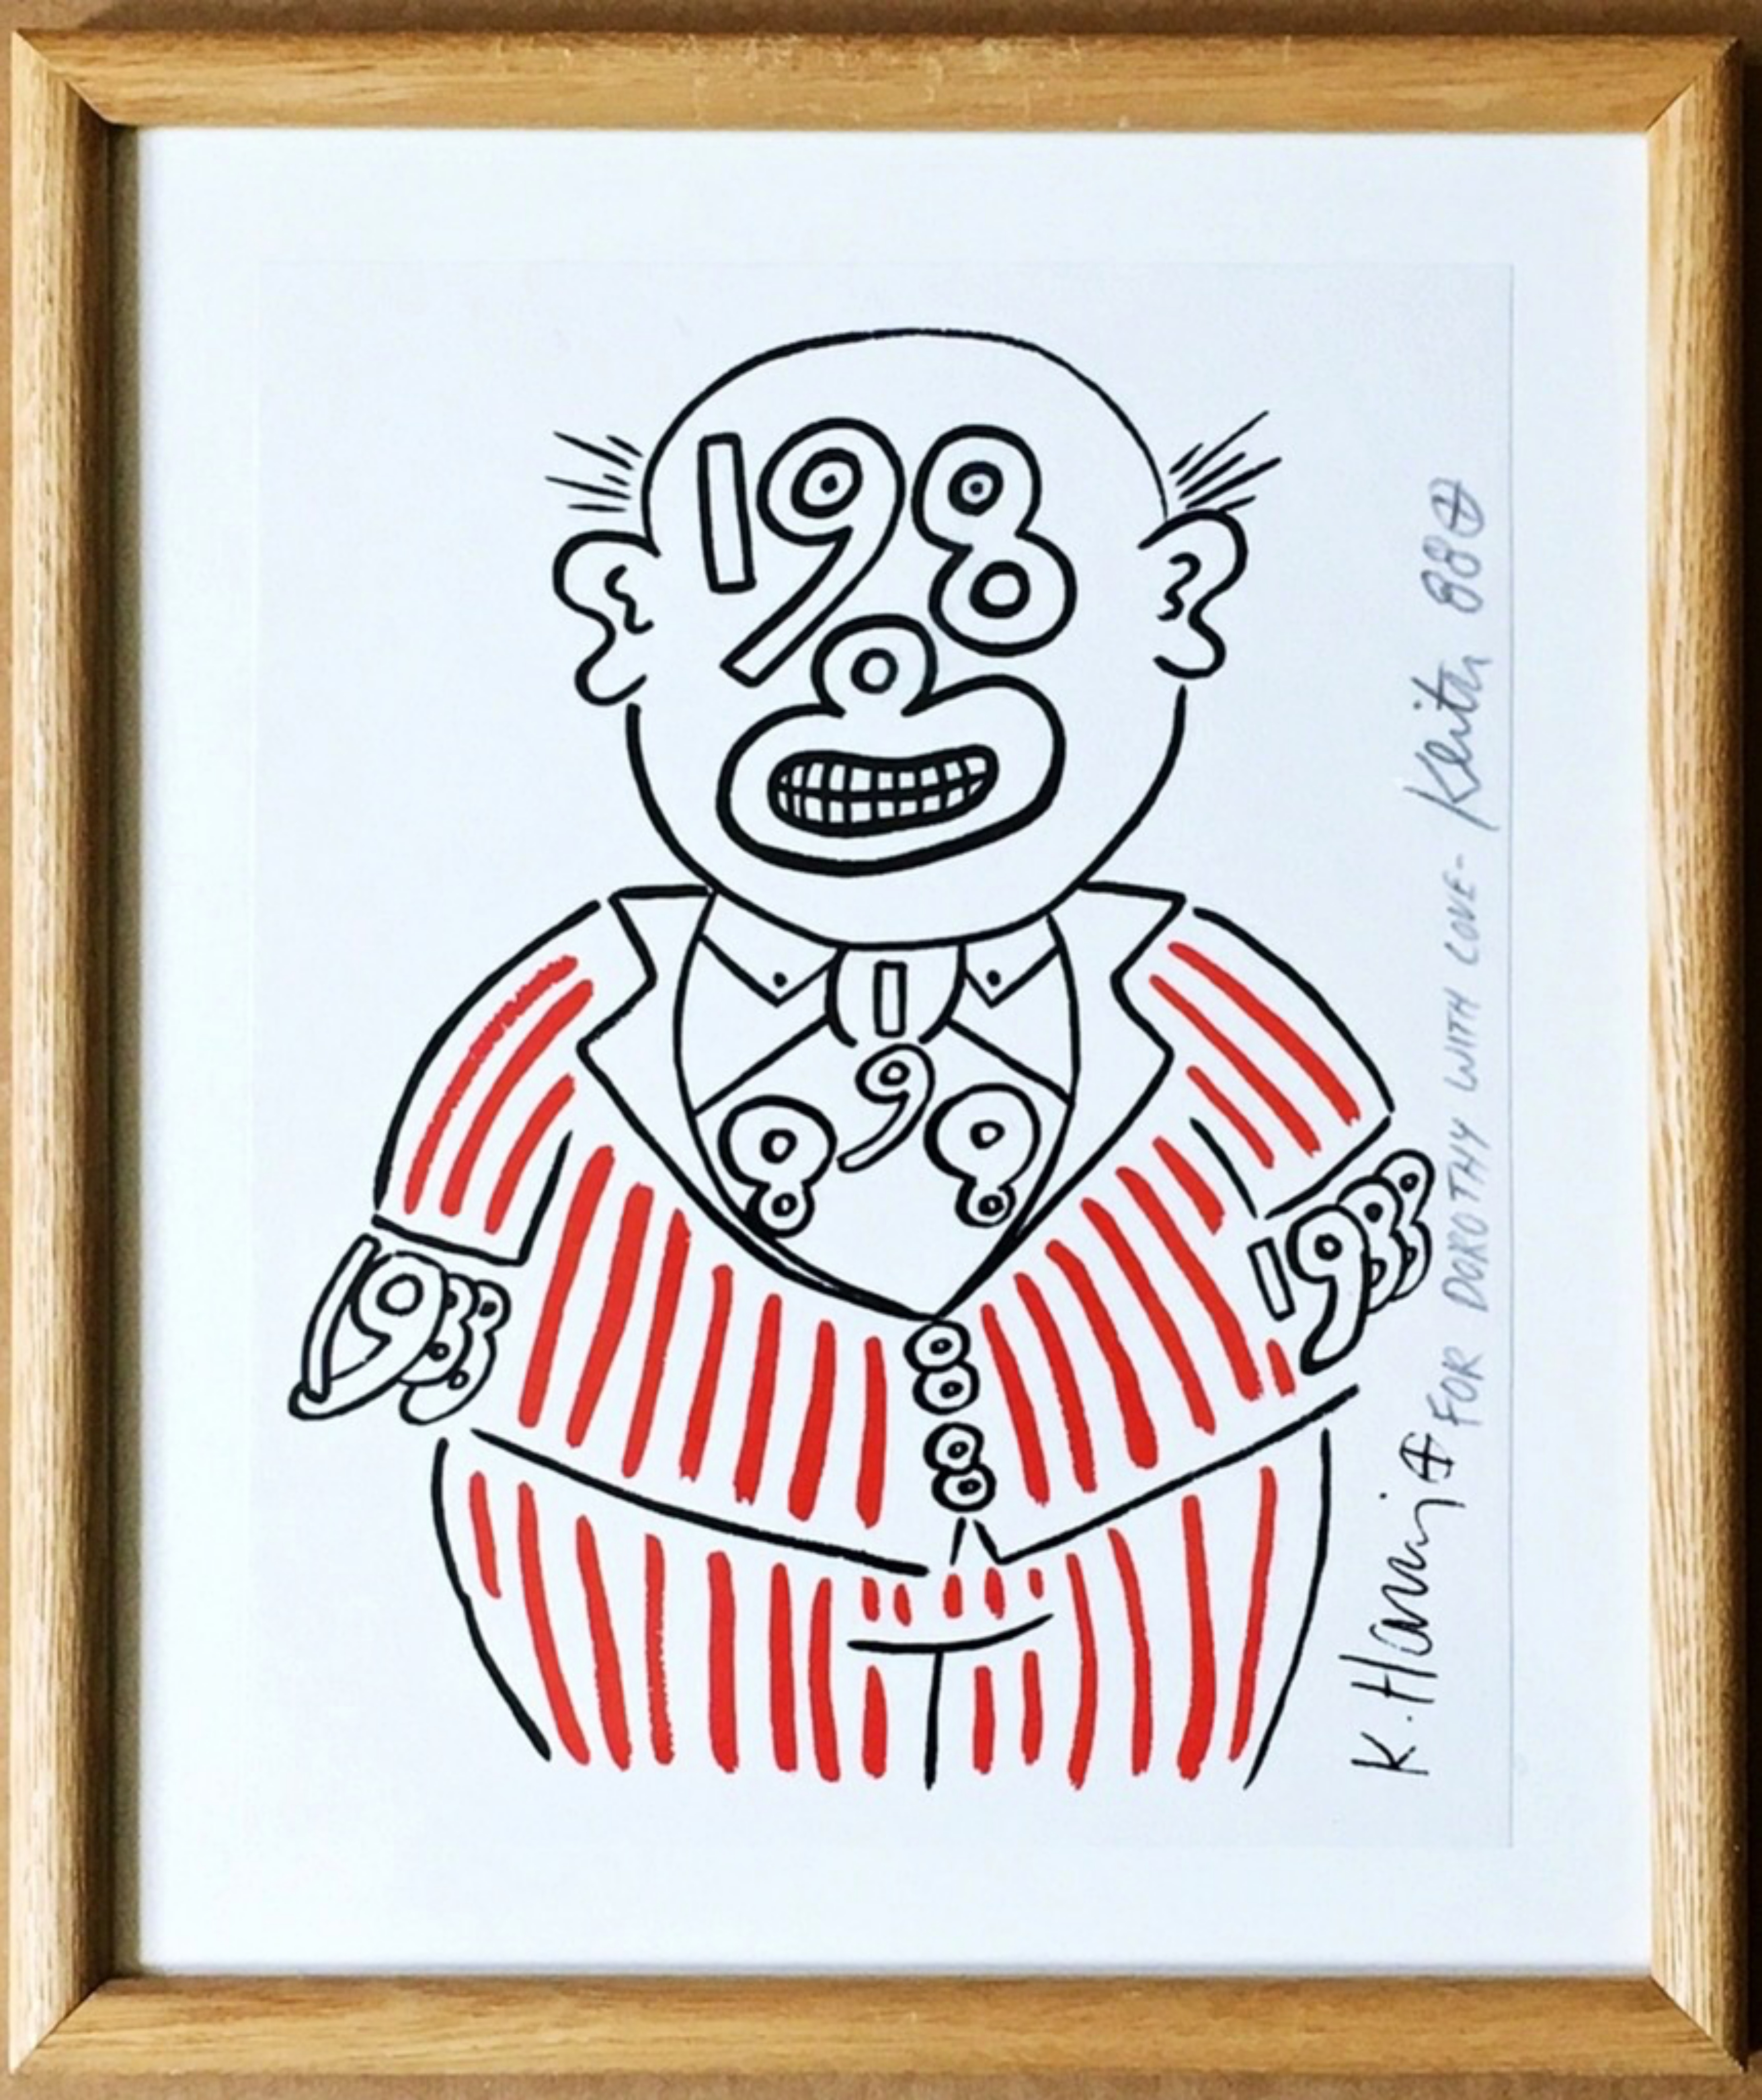 Keith Haring, 1988 Man, 1988 - Alpha 137 Gallery